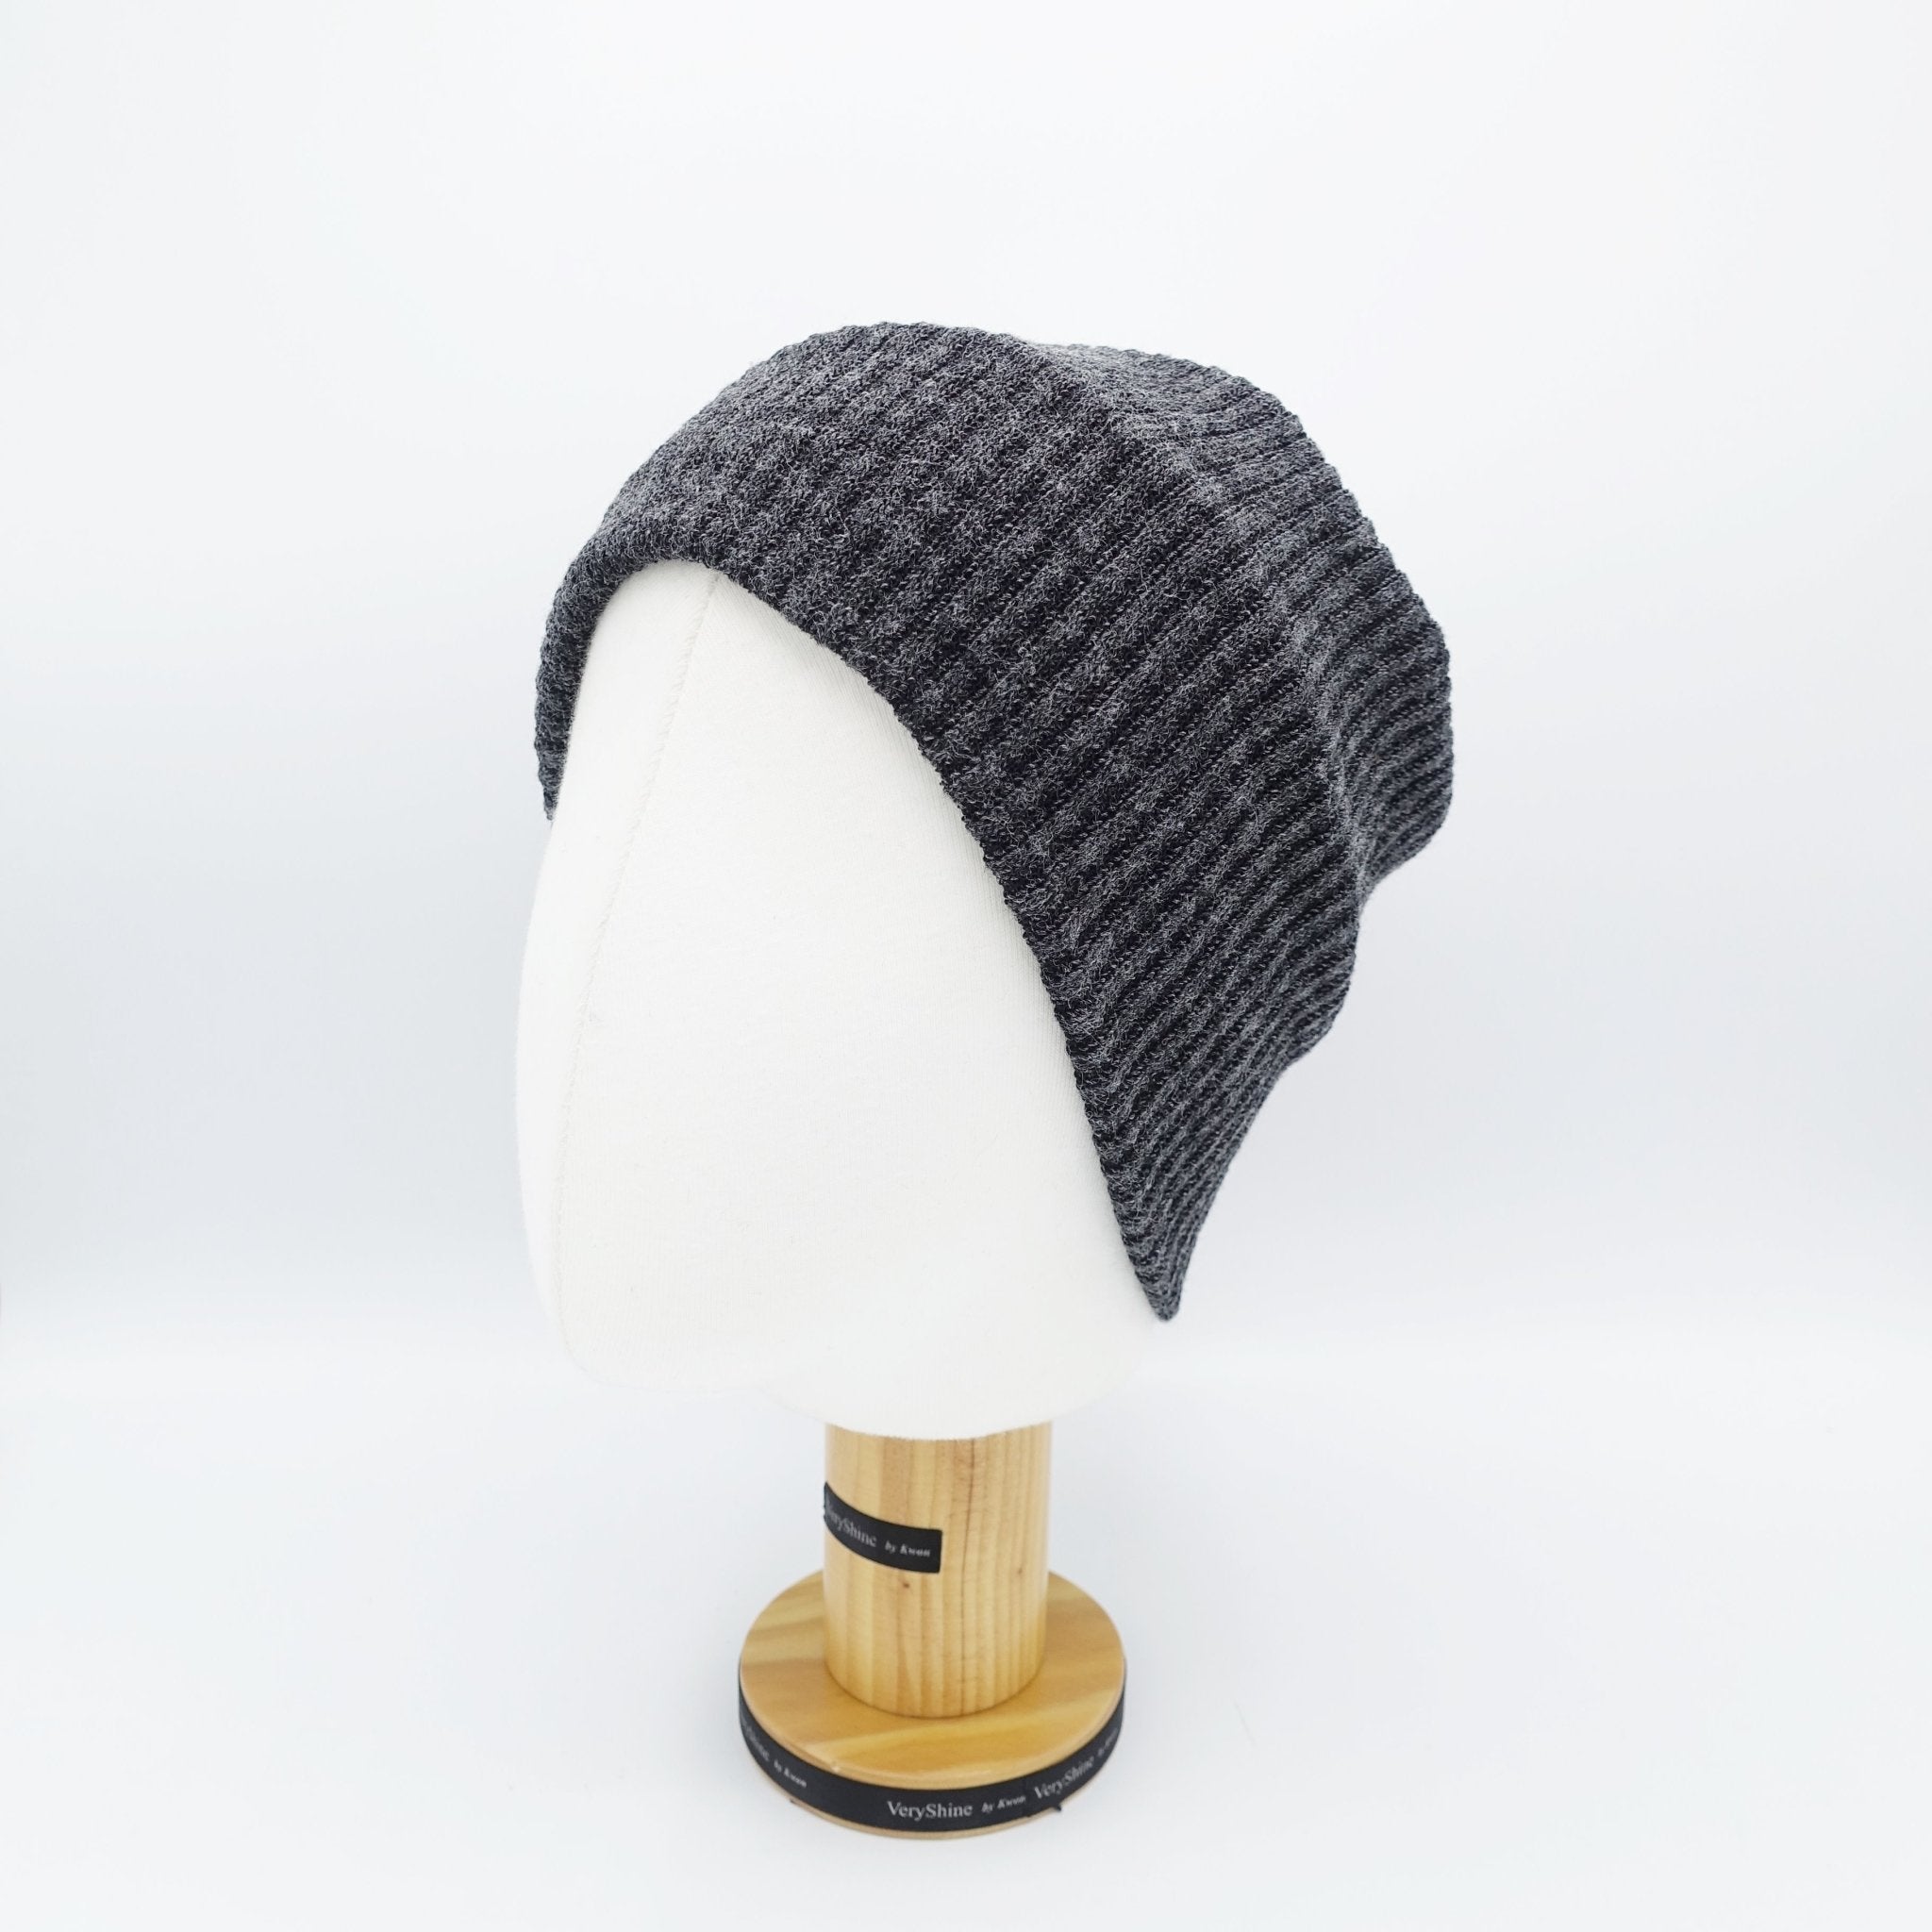 veryshine.com hairband/headband Dark gray corrugated knit headwrap multi-functional headband Winter neck warmer